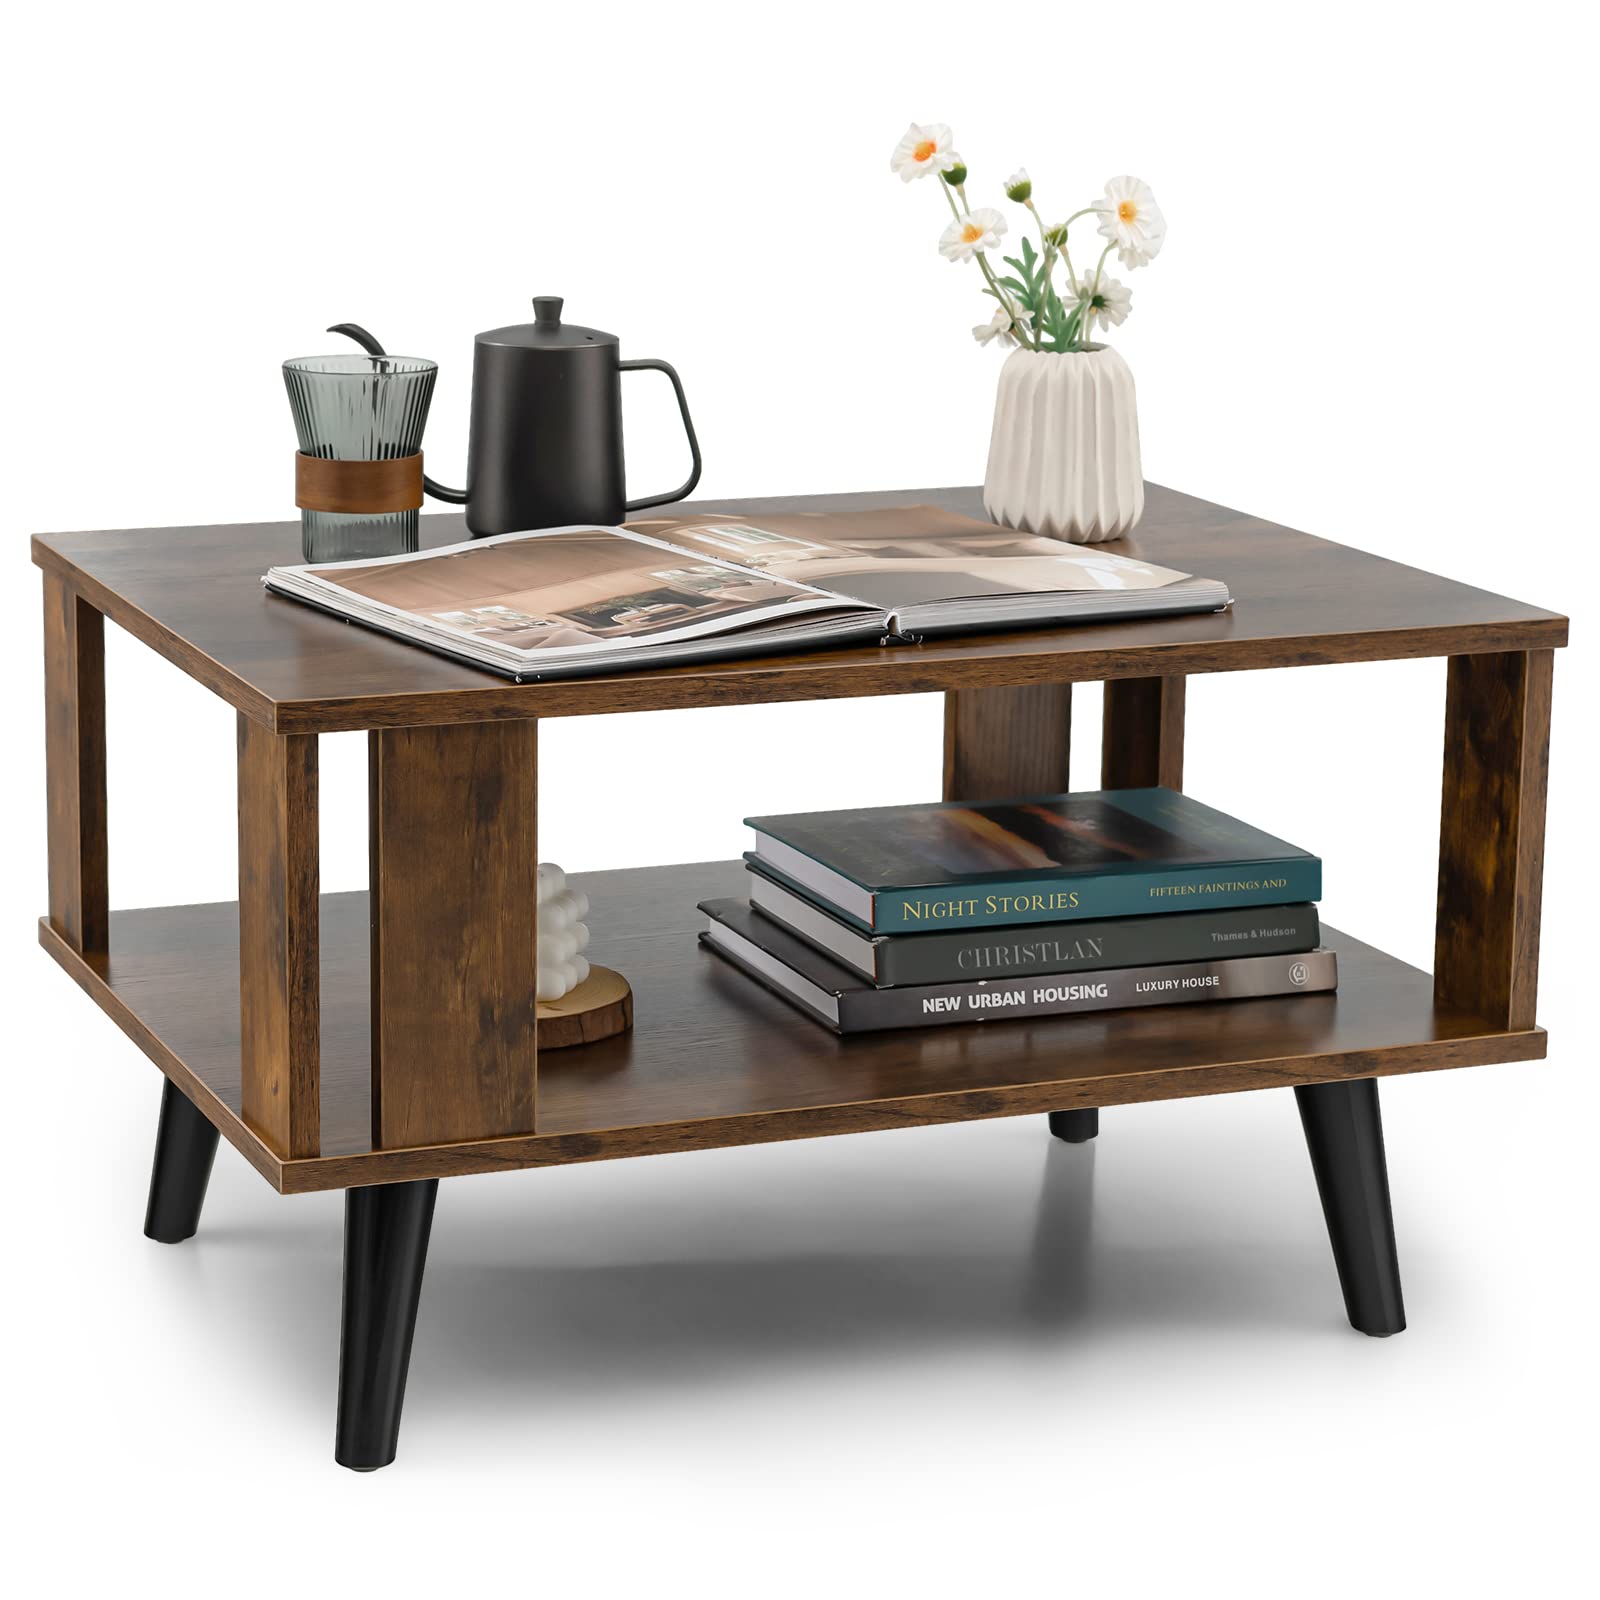 Giantex Retro Wood Coffee Table, 2-Tier Tea Table w/Open Storage Shelf & Supportive Legs